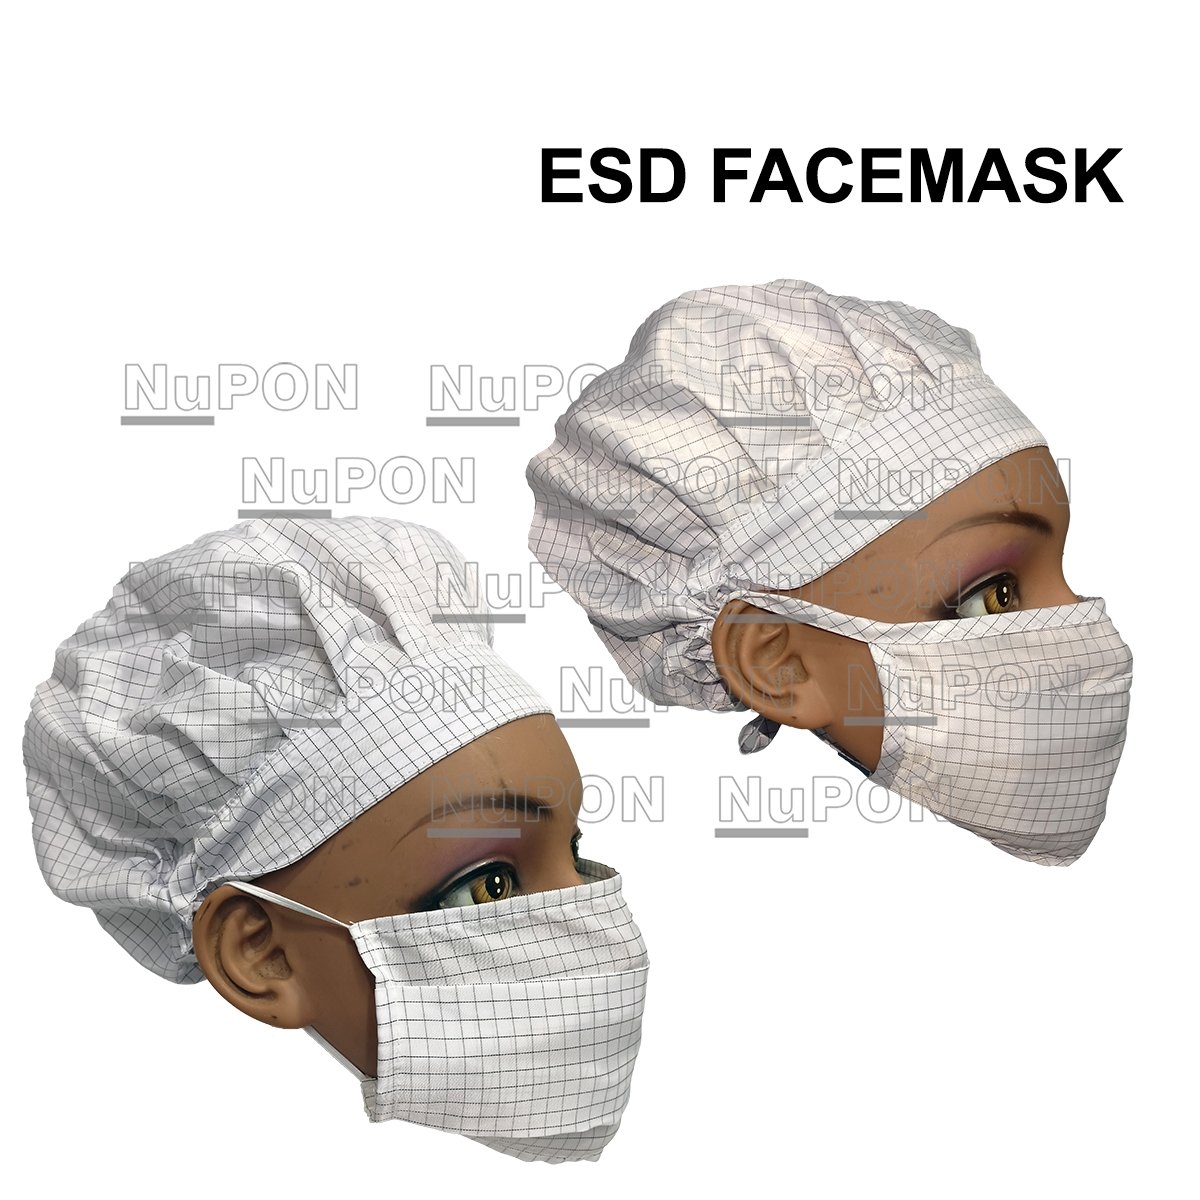 ESD Facemask